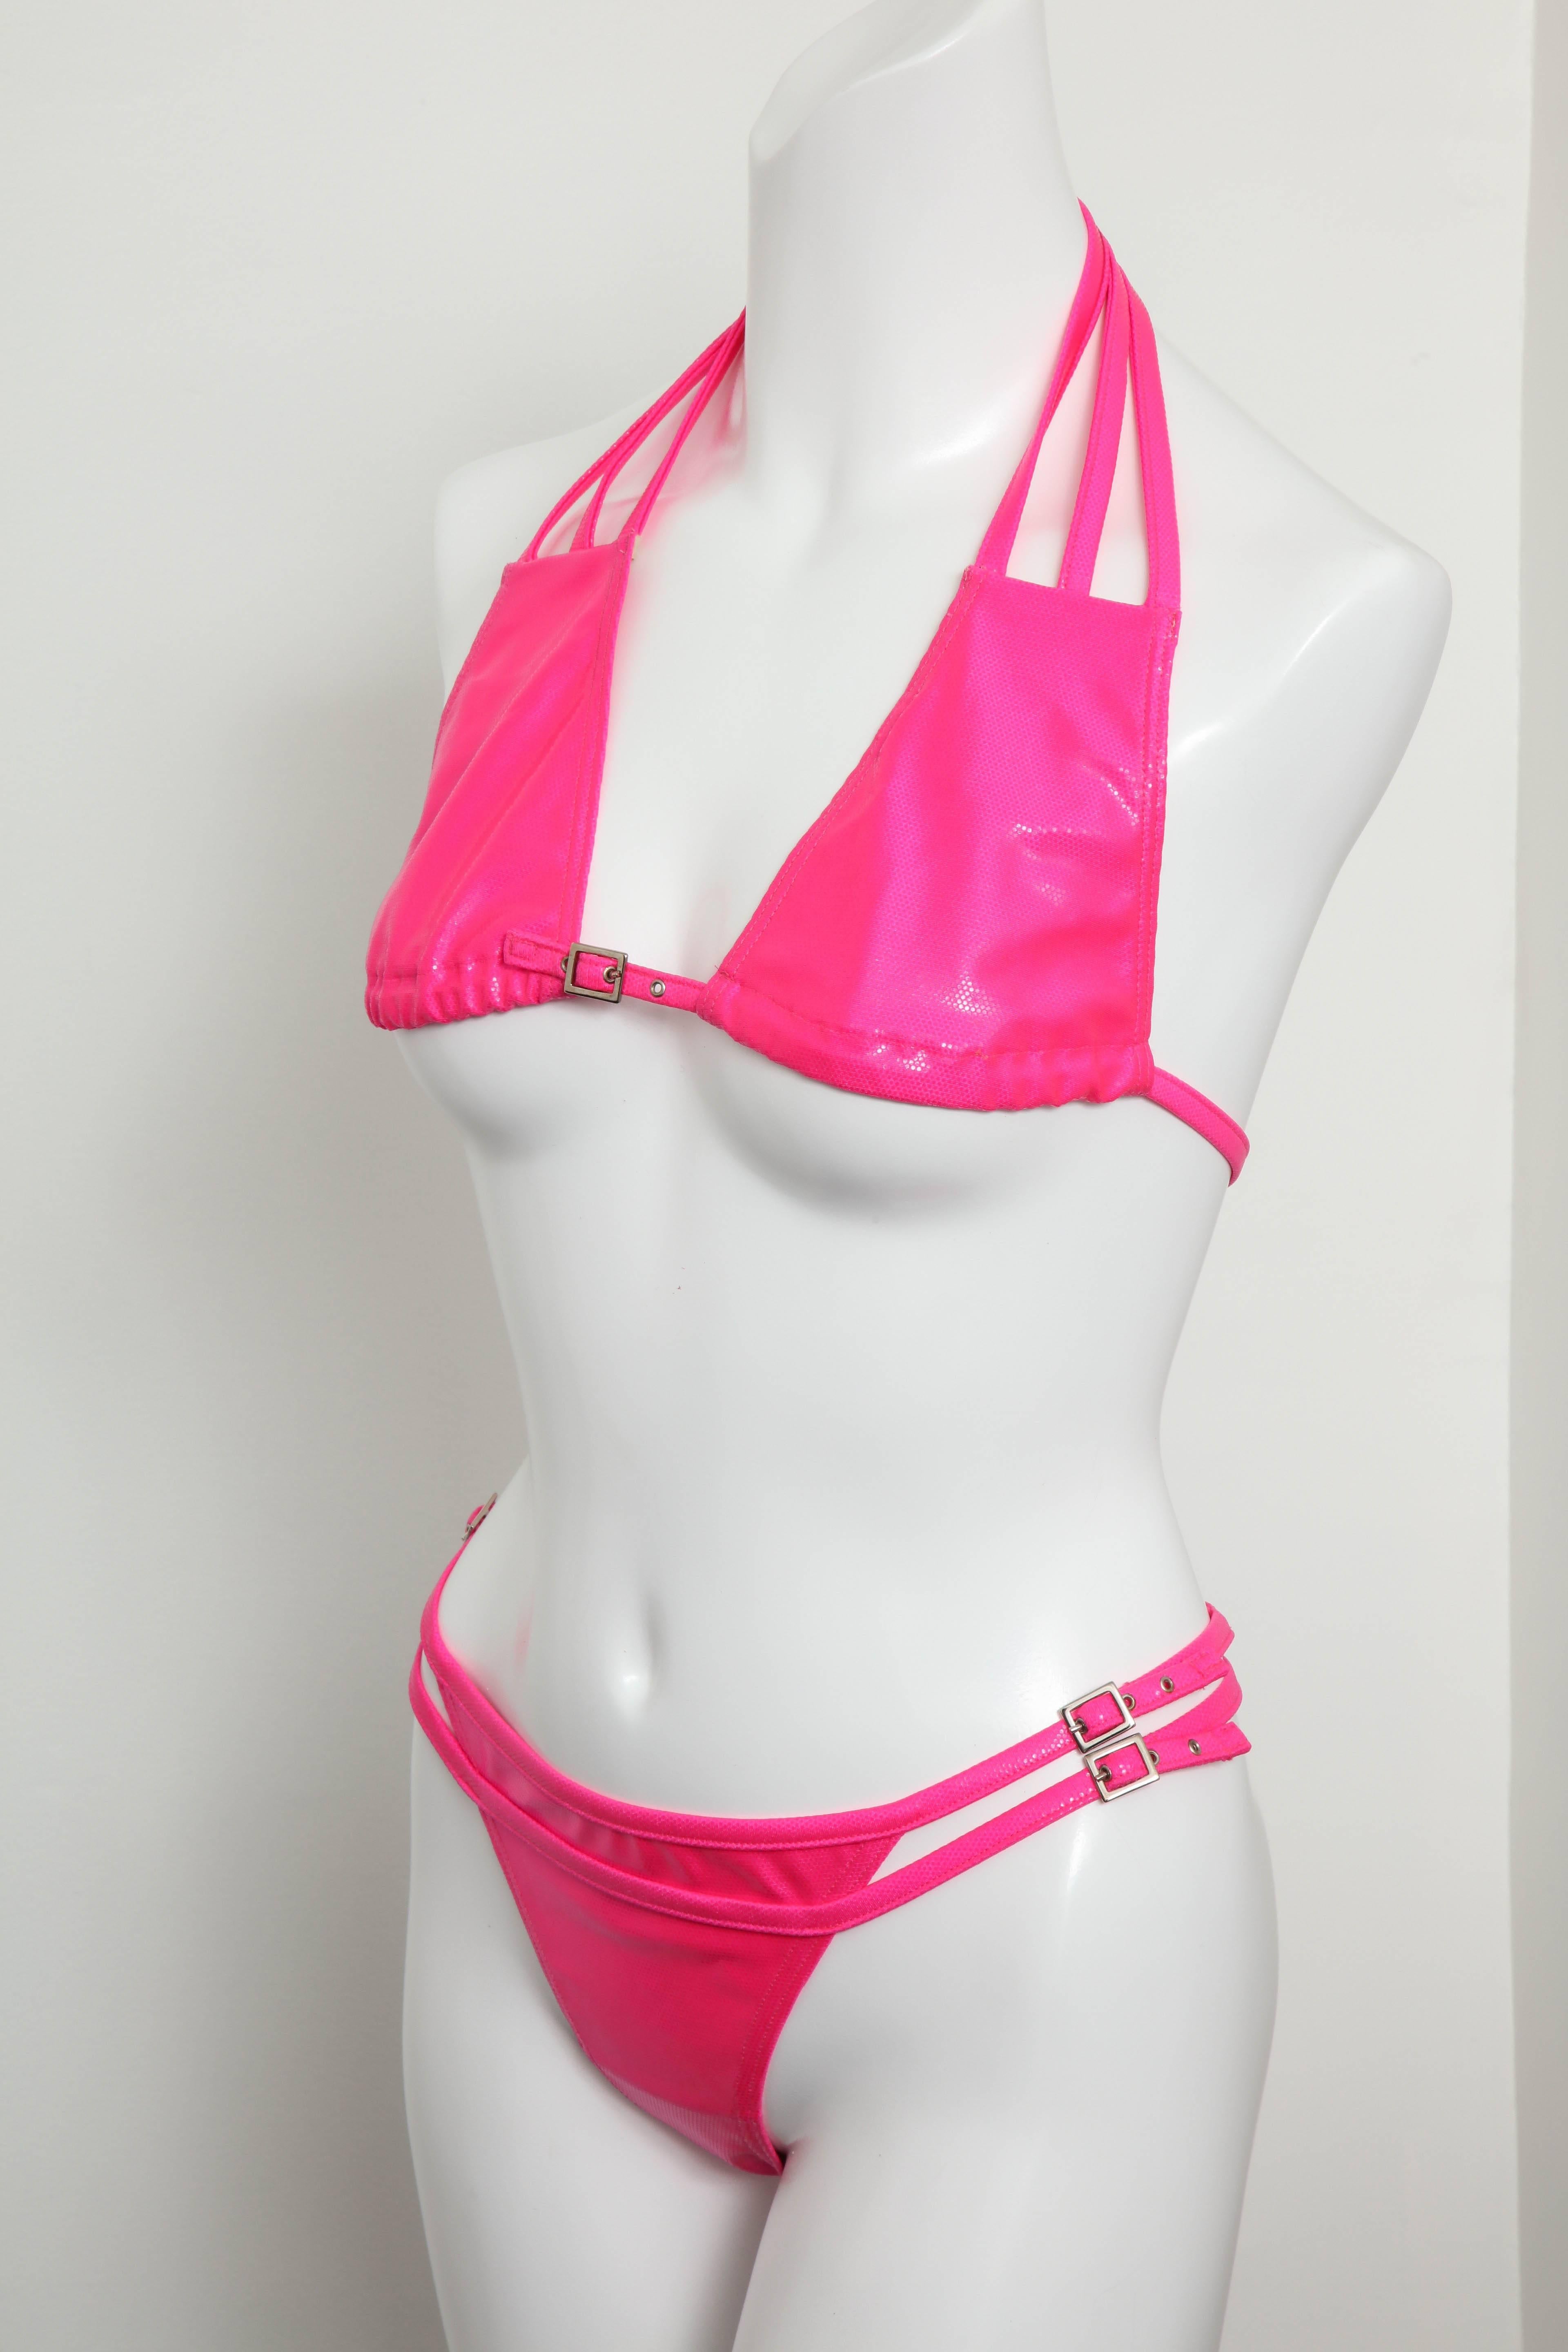 John Galliano for Christian Dior Pink Bikini For Sale 3